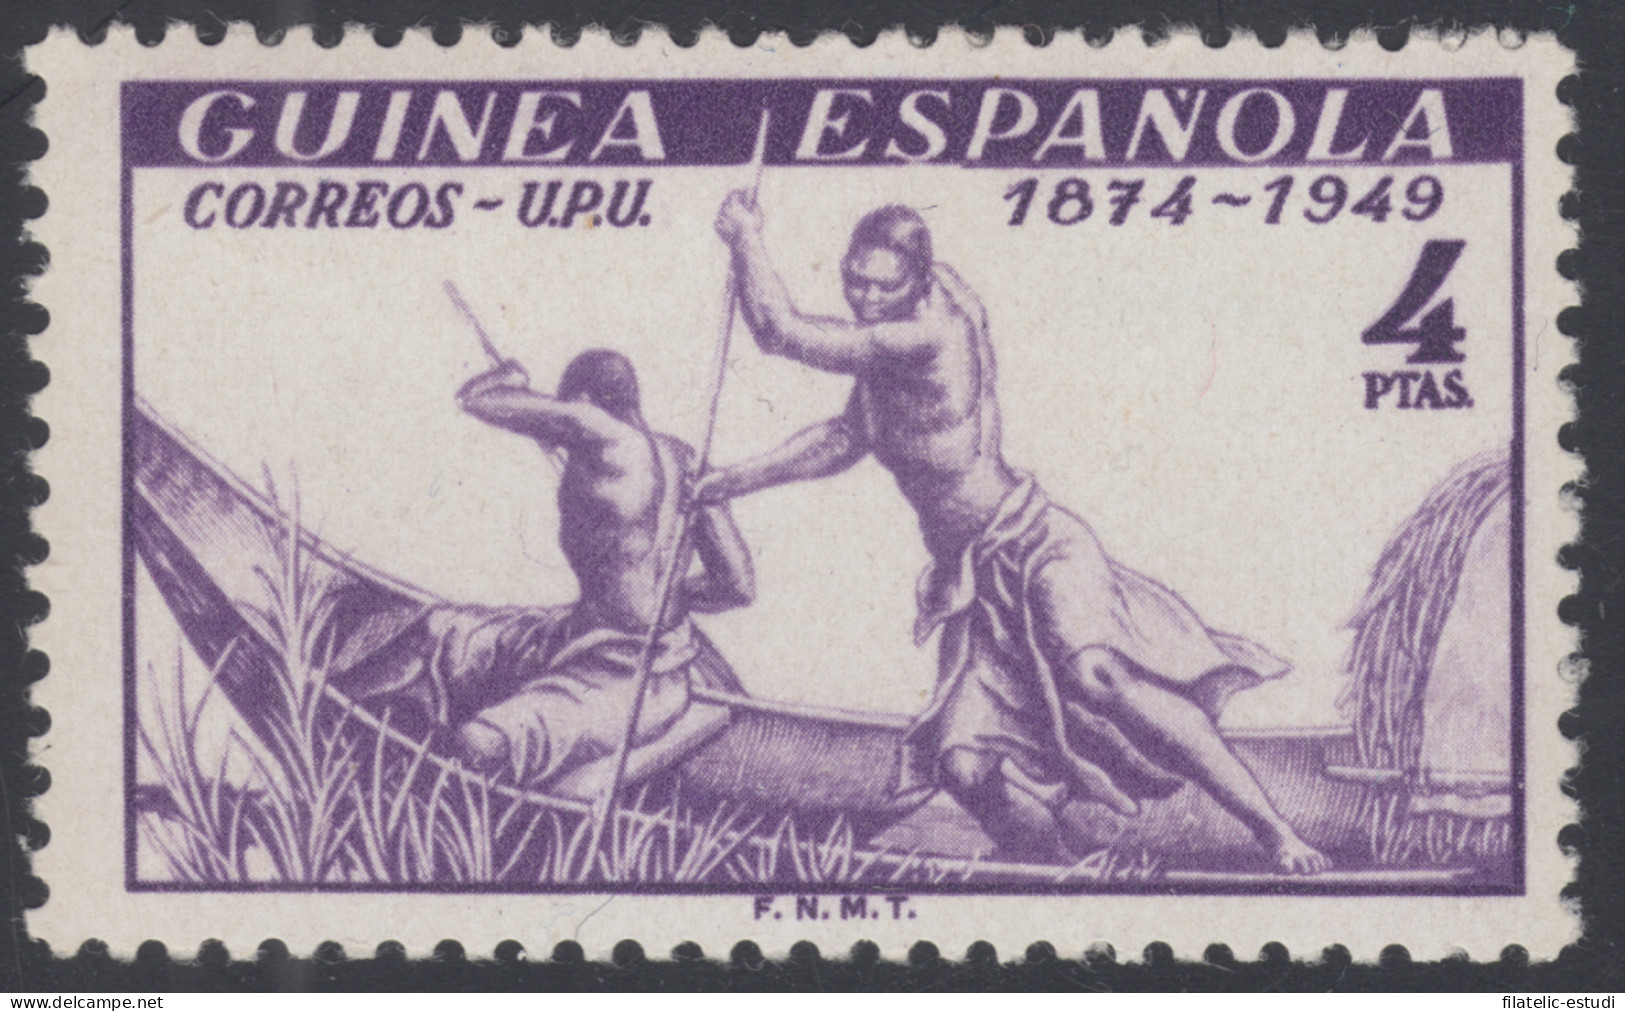 Guinea Española 275 1949 UPU MNH - Guinée Espagnole